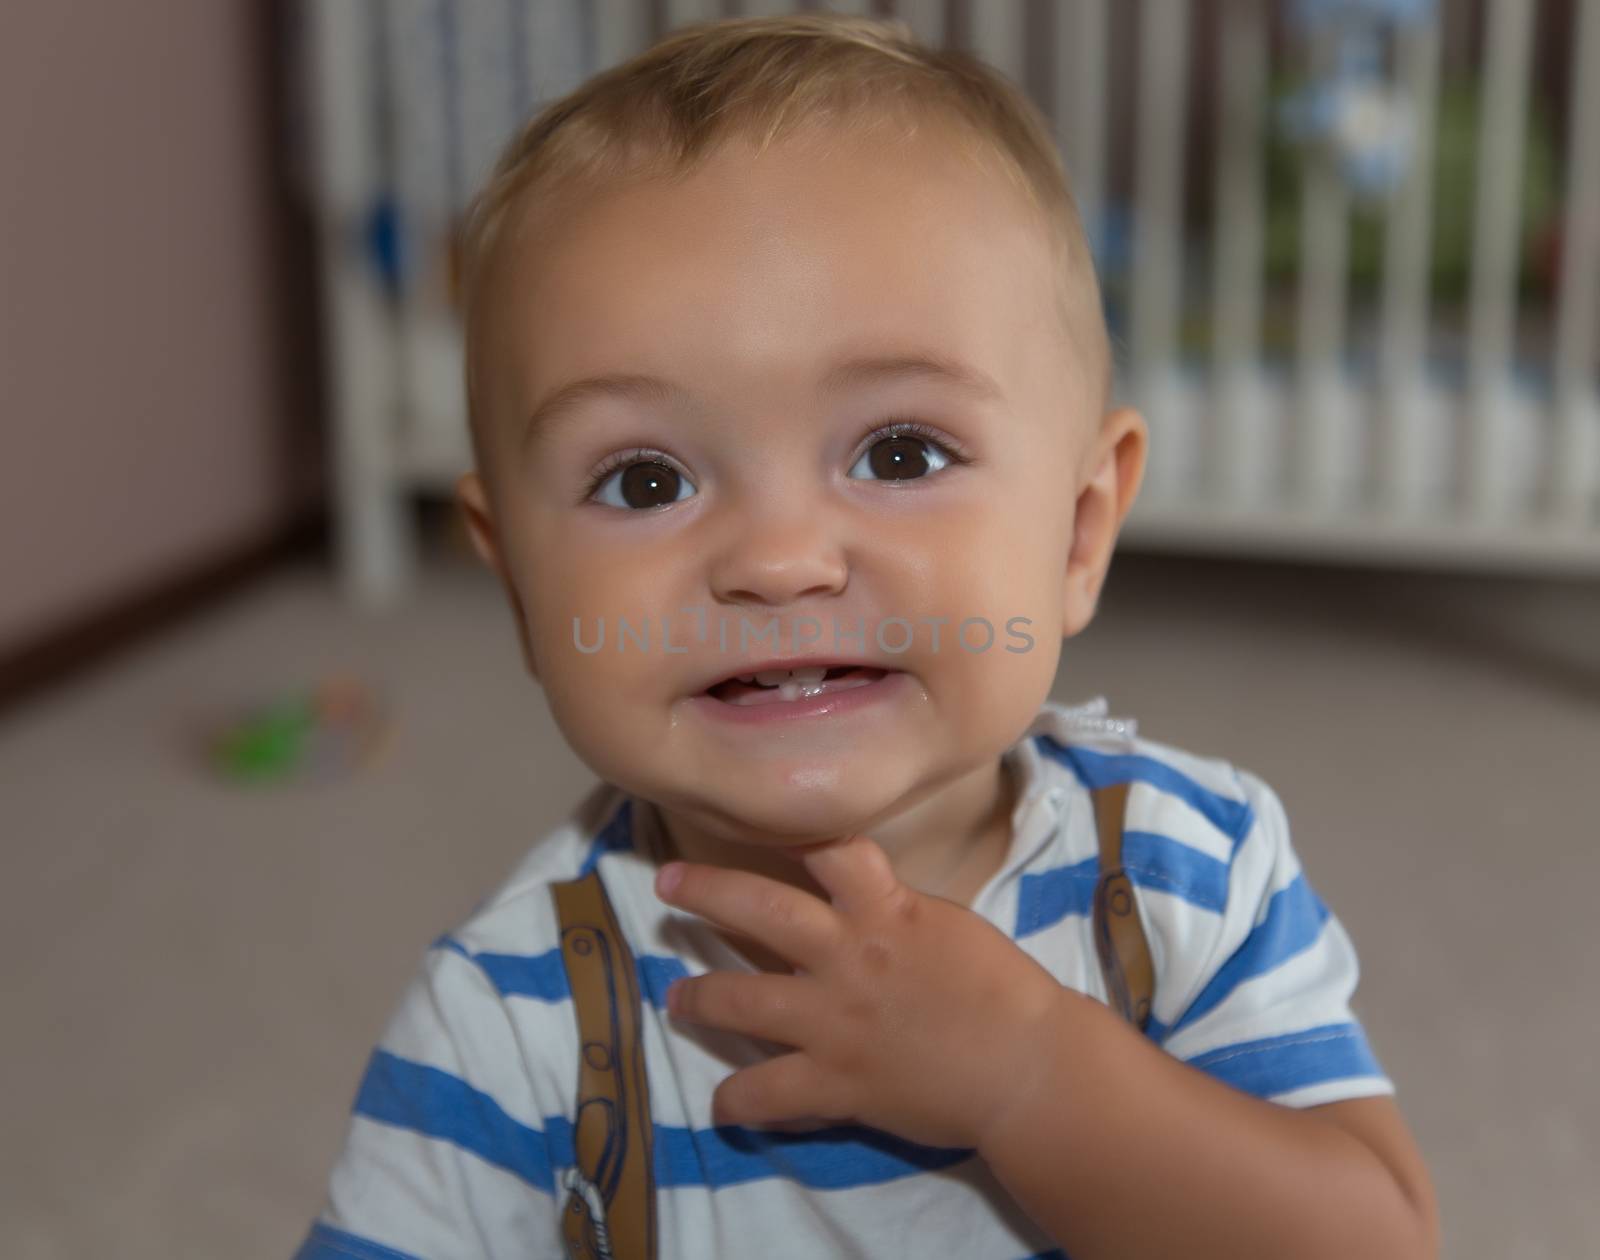 pretty little baby boy by desant7474